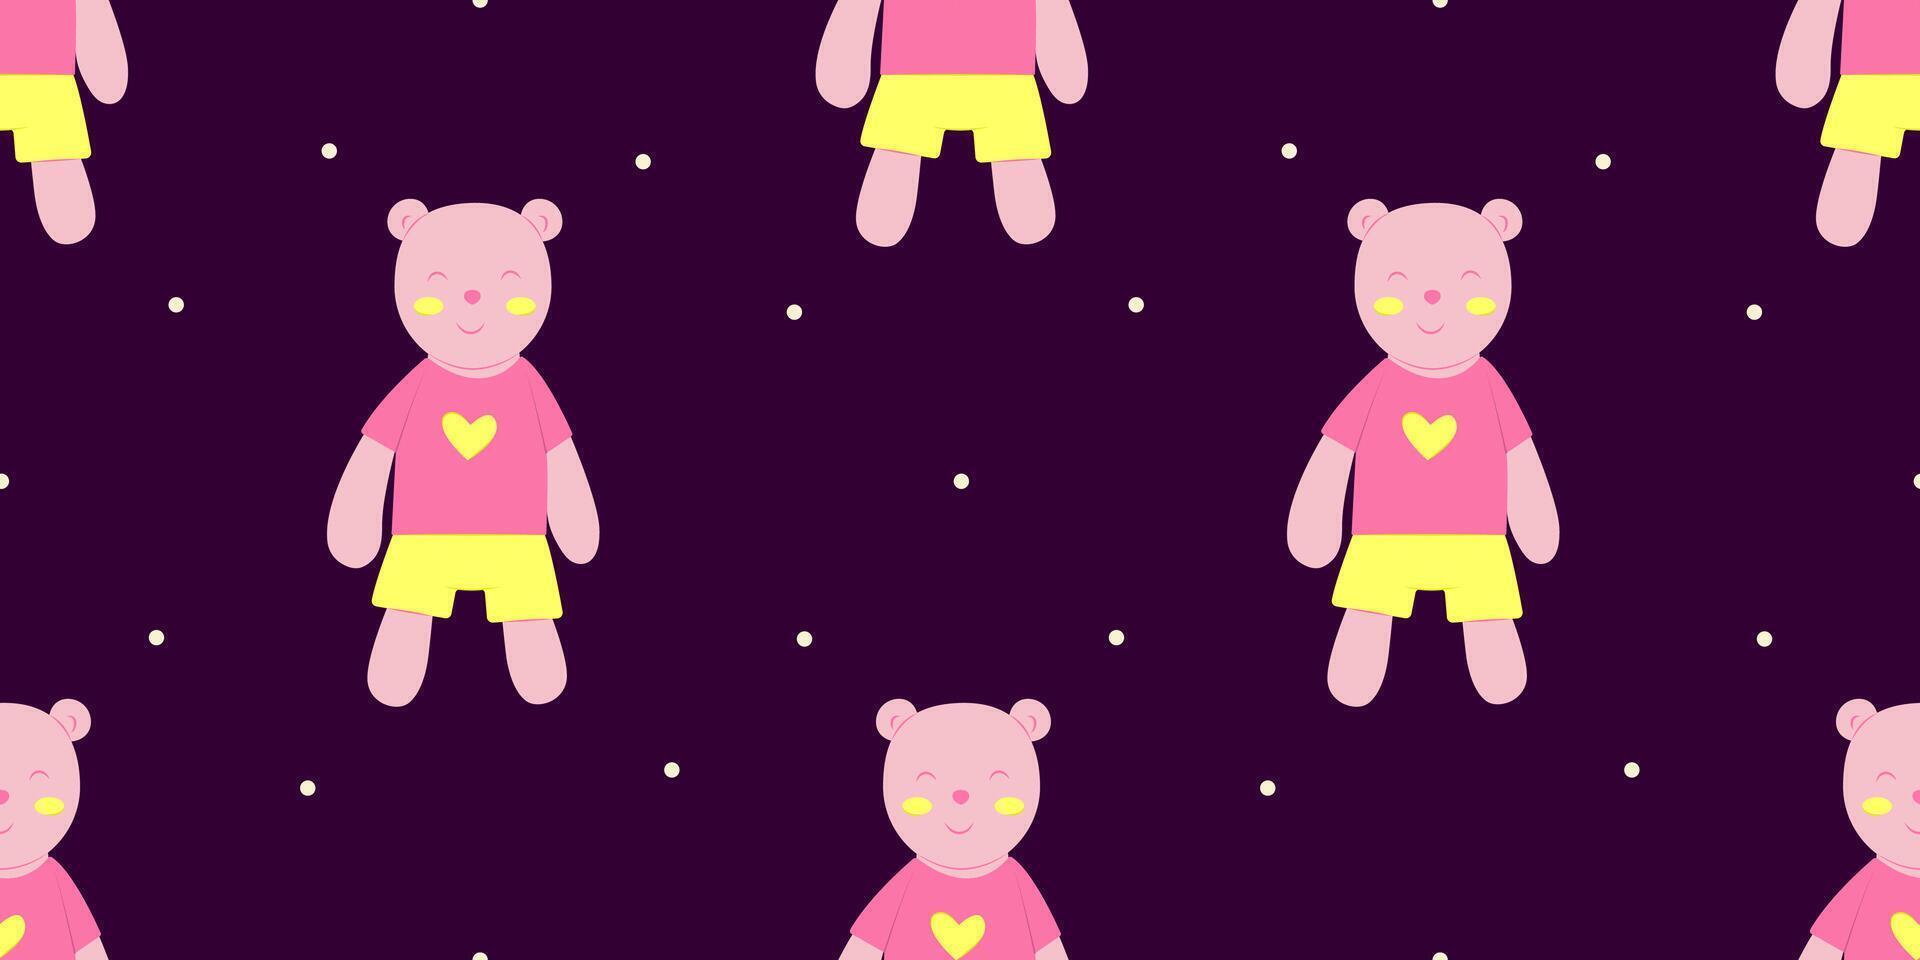 Seamless pattern of cute pink teddy bear for sleeping. Sleep concept. Vector illustration